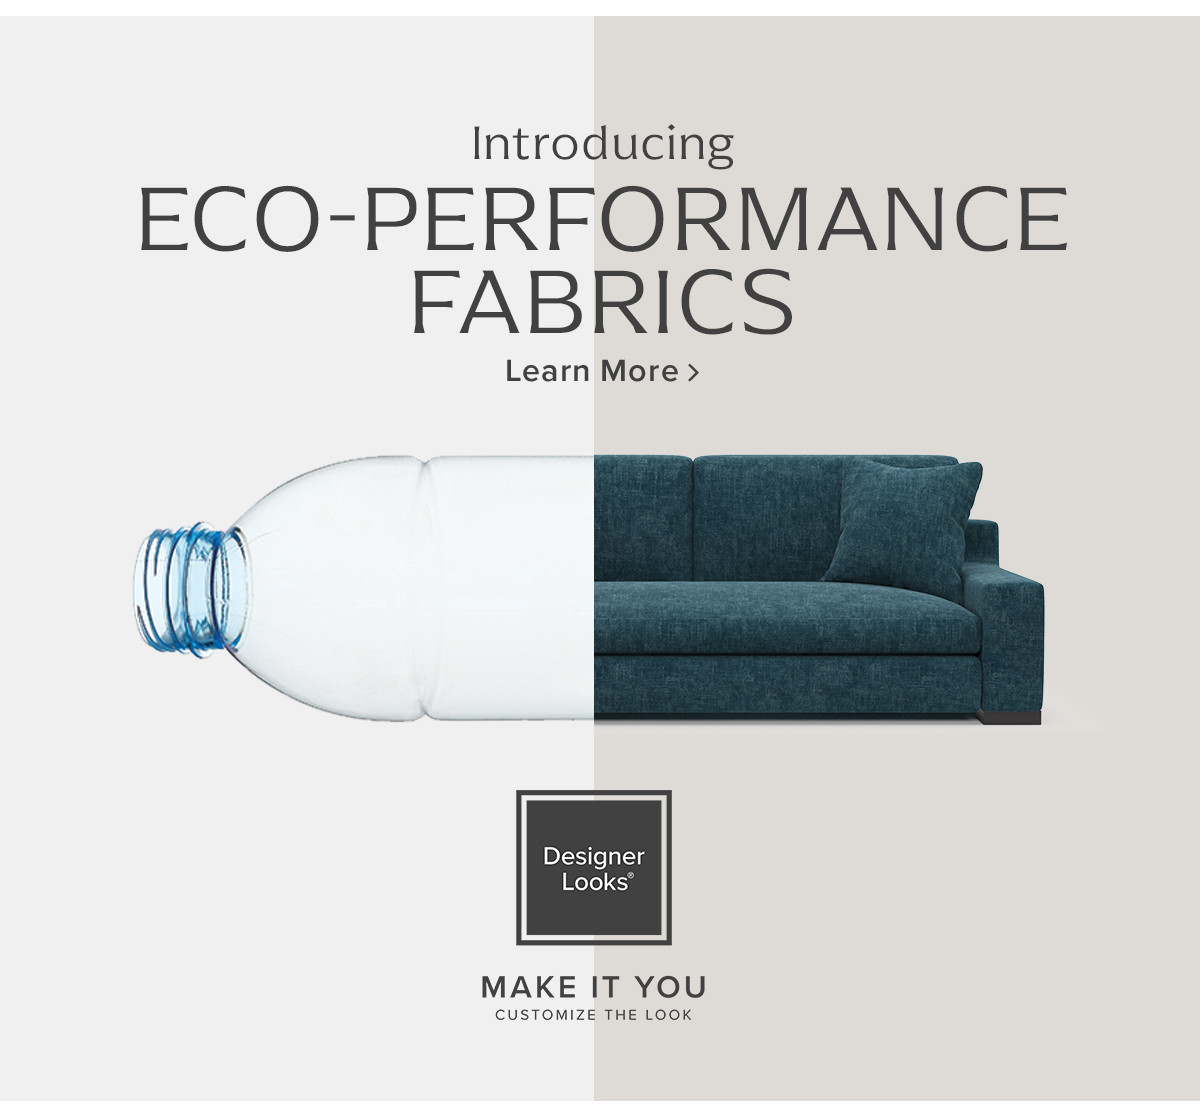 Introducing Eco-Performance Fabrics